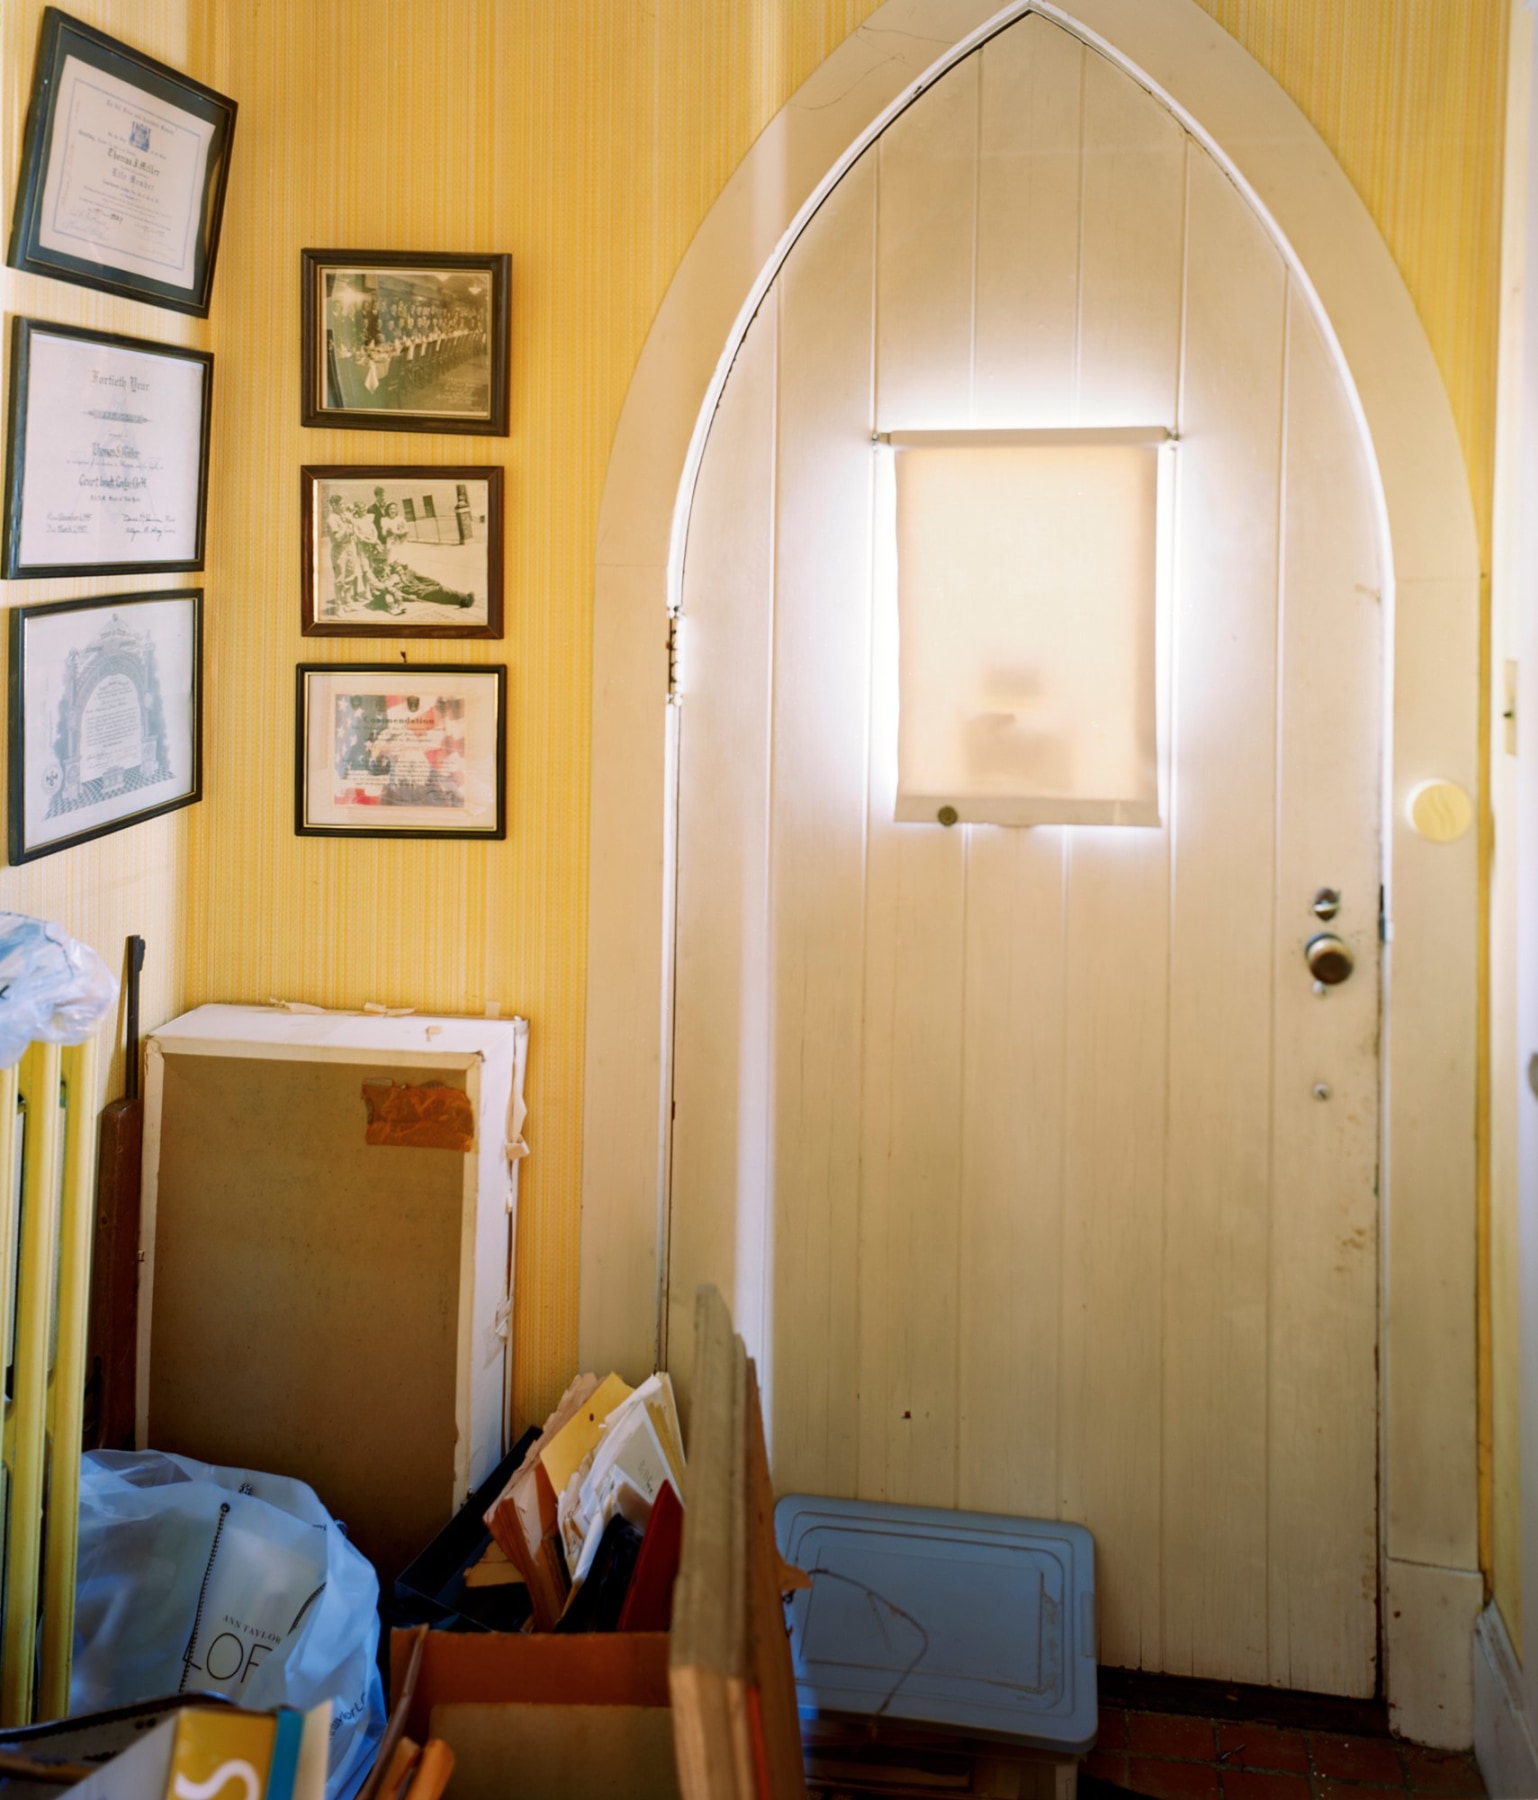 Photograph of interior of door and glowing light by Jade Doskow